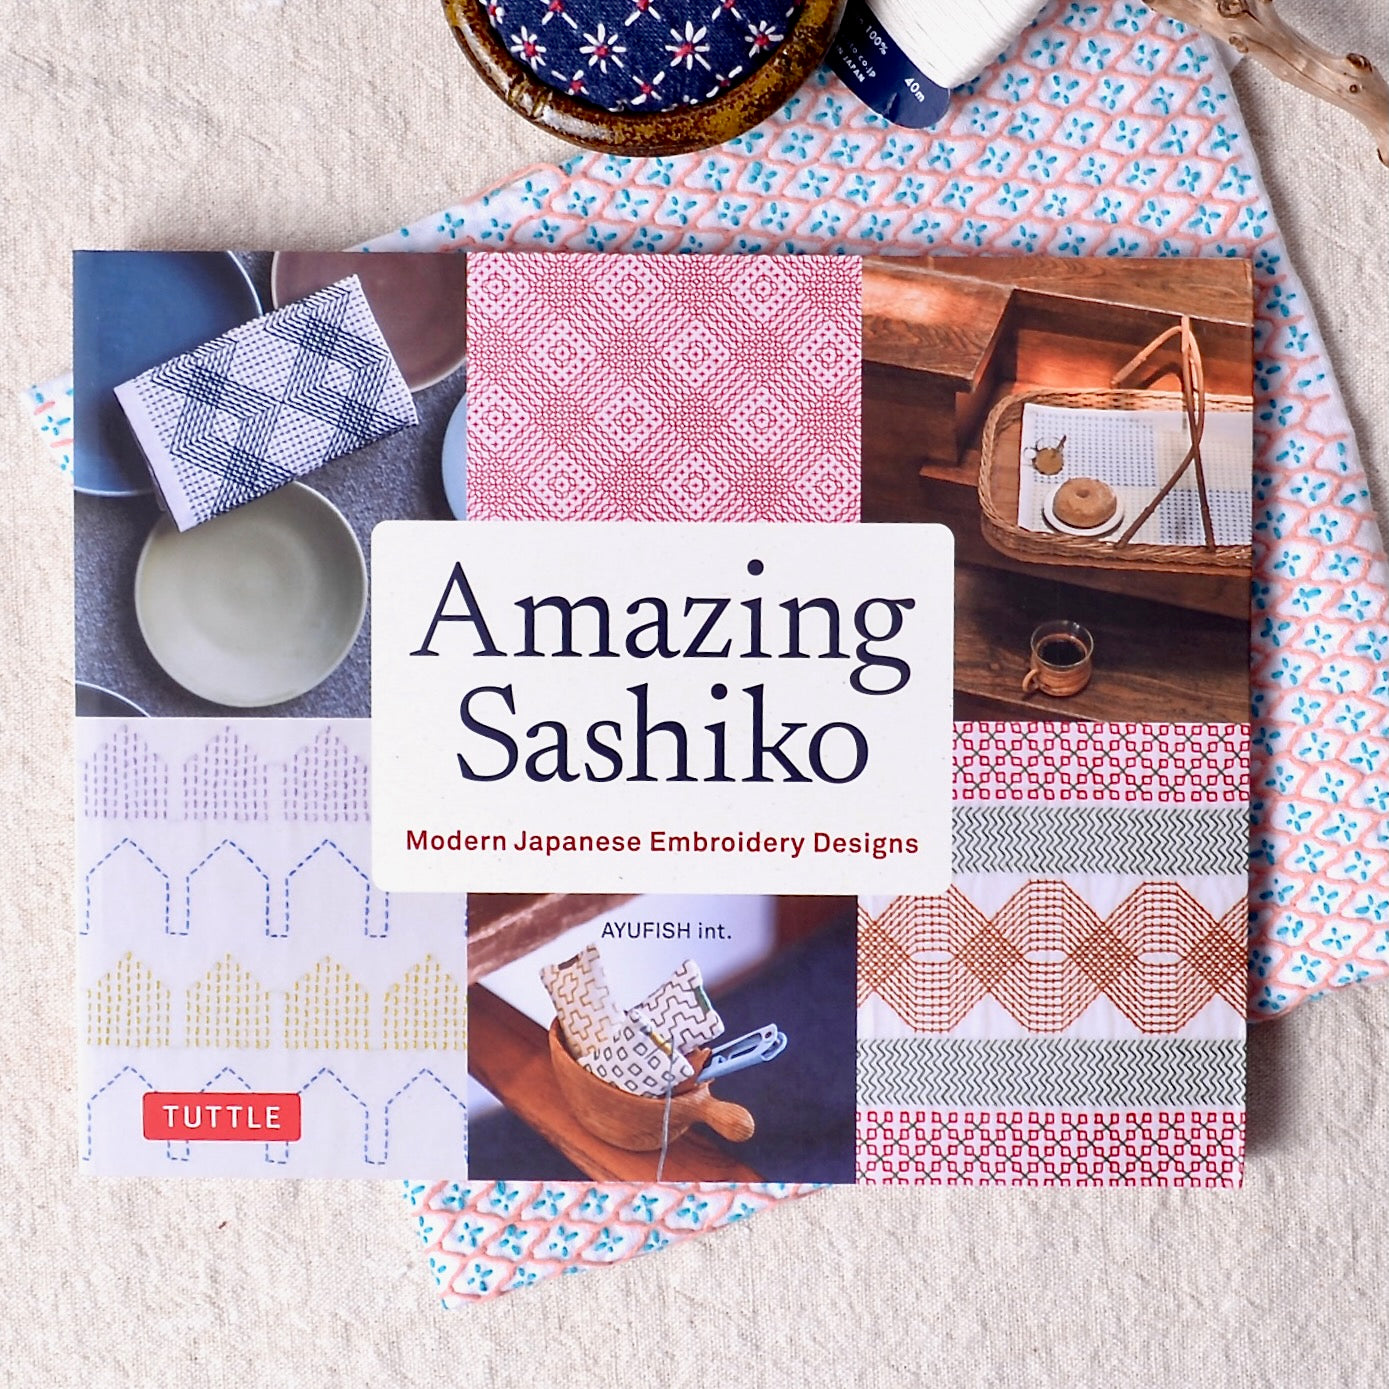 Amazing Sashiko, Modern Japanese Embroidery Designs, The Book - A